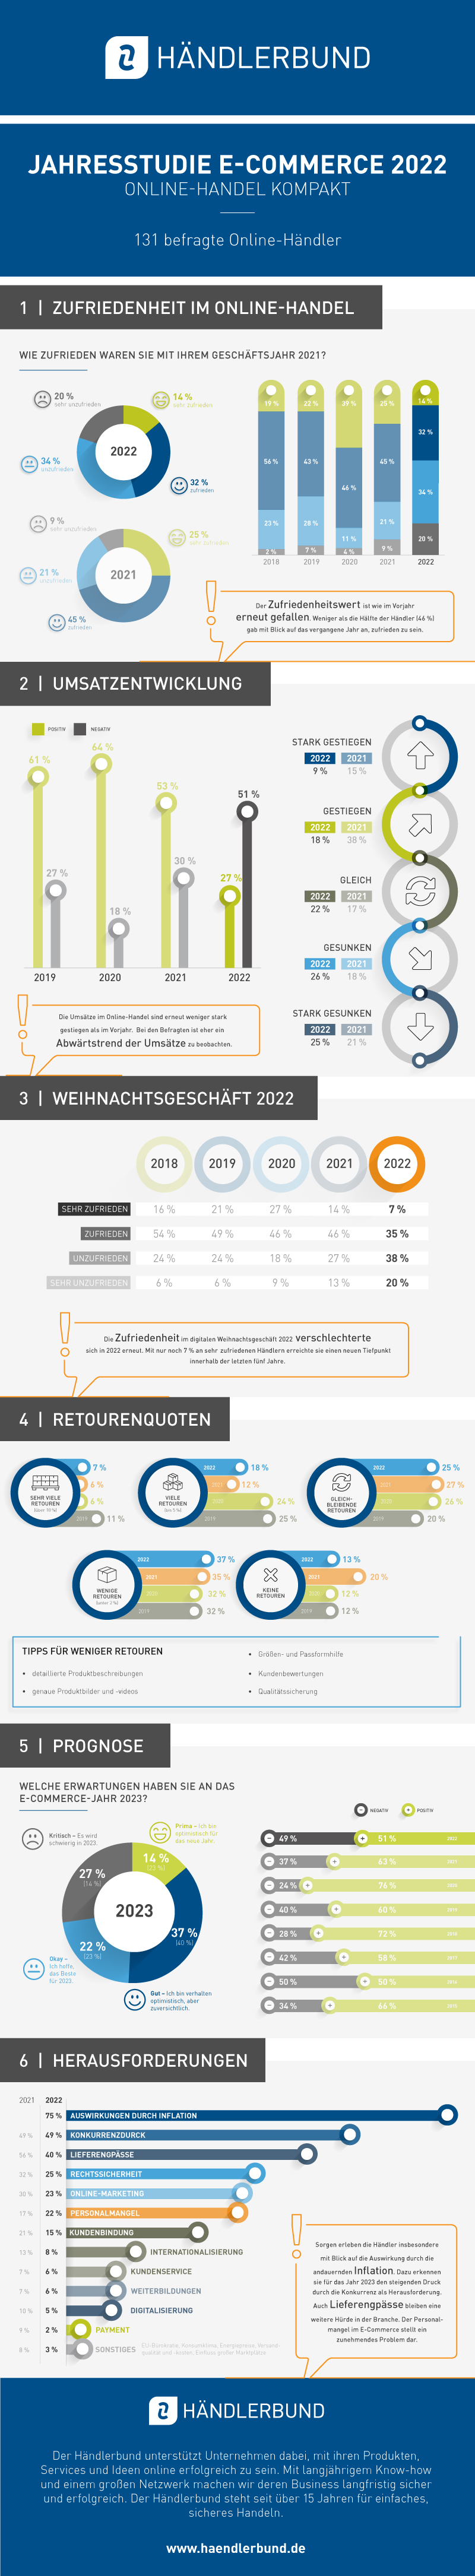 2021-Jahresstudie-E-Commerce-Infografik